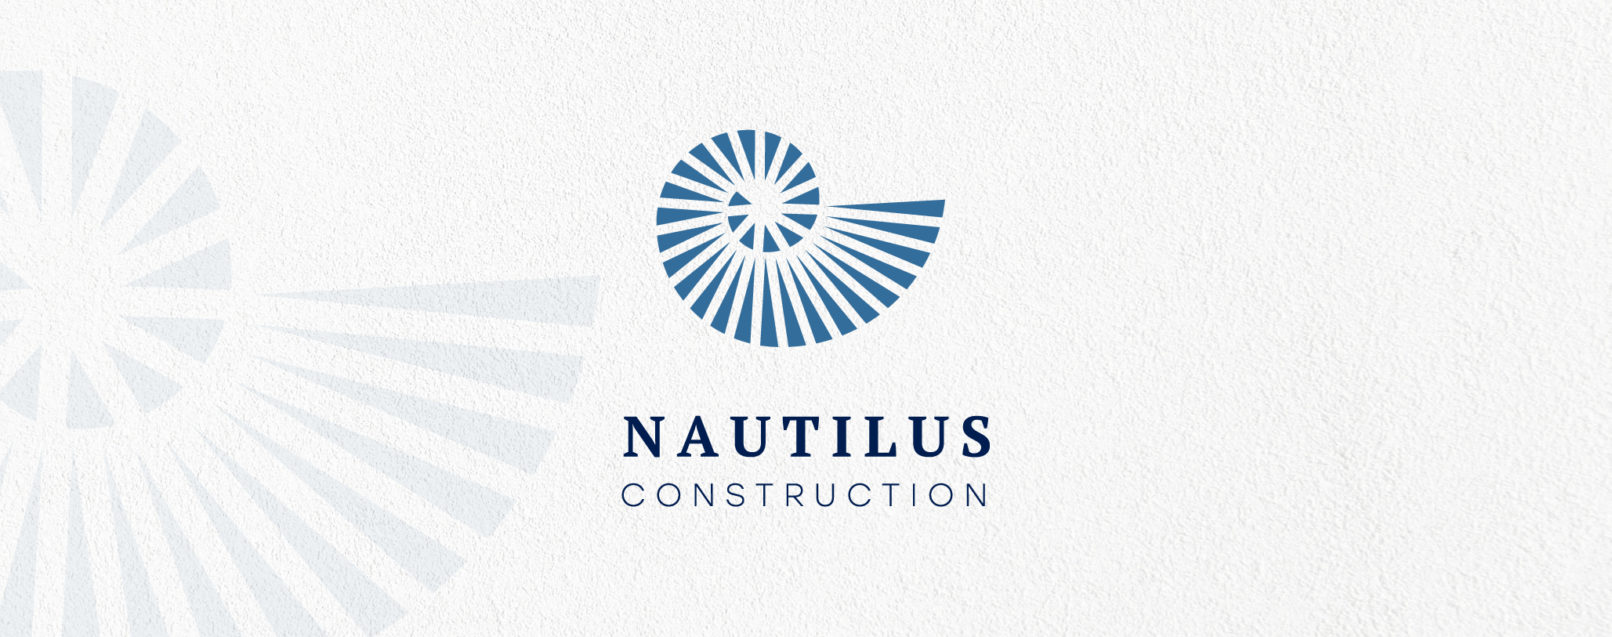 Nautilus Construction Branding logo